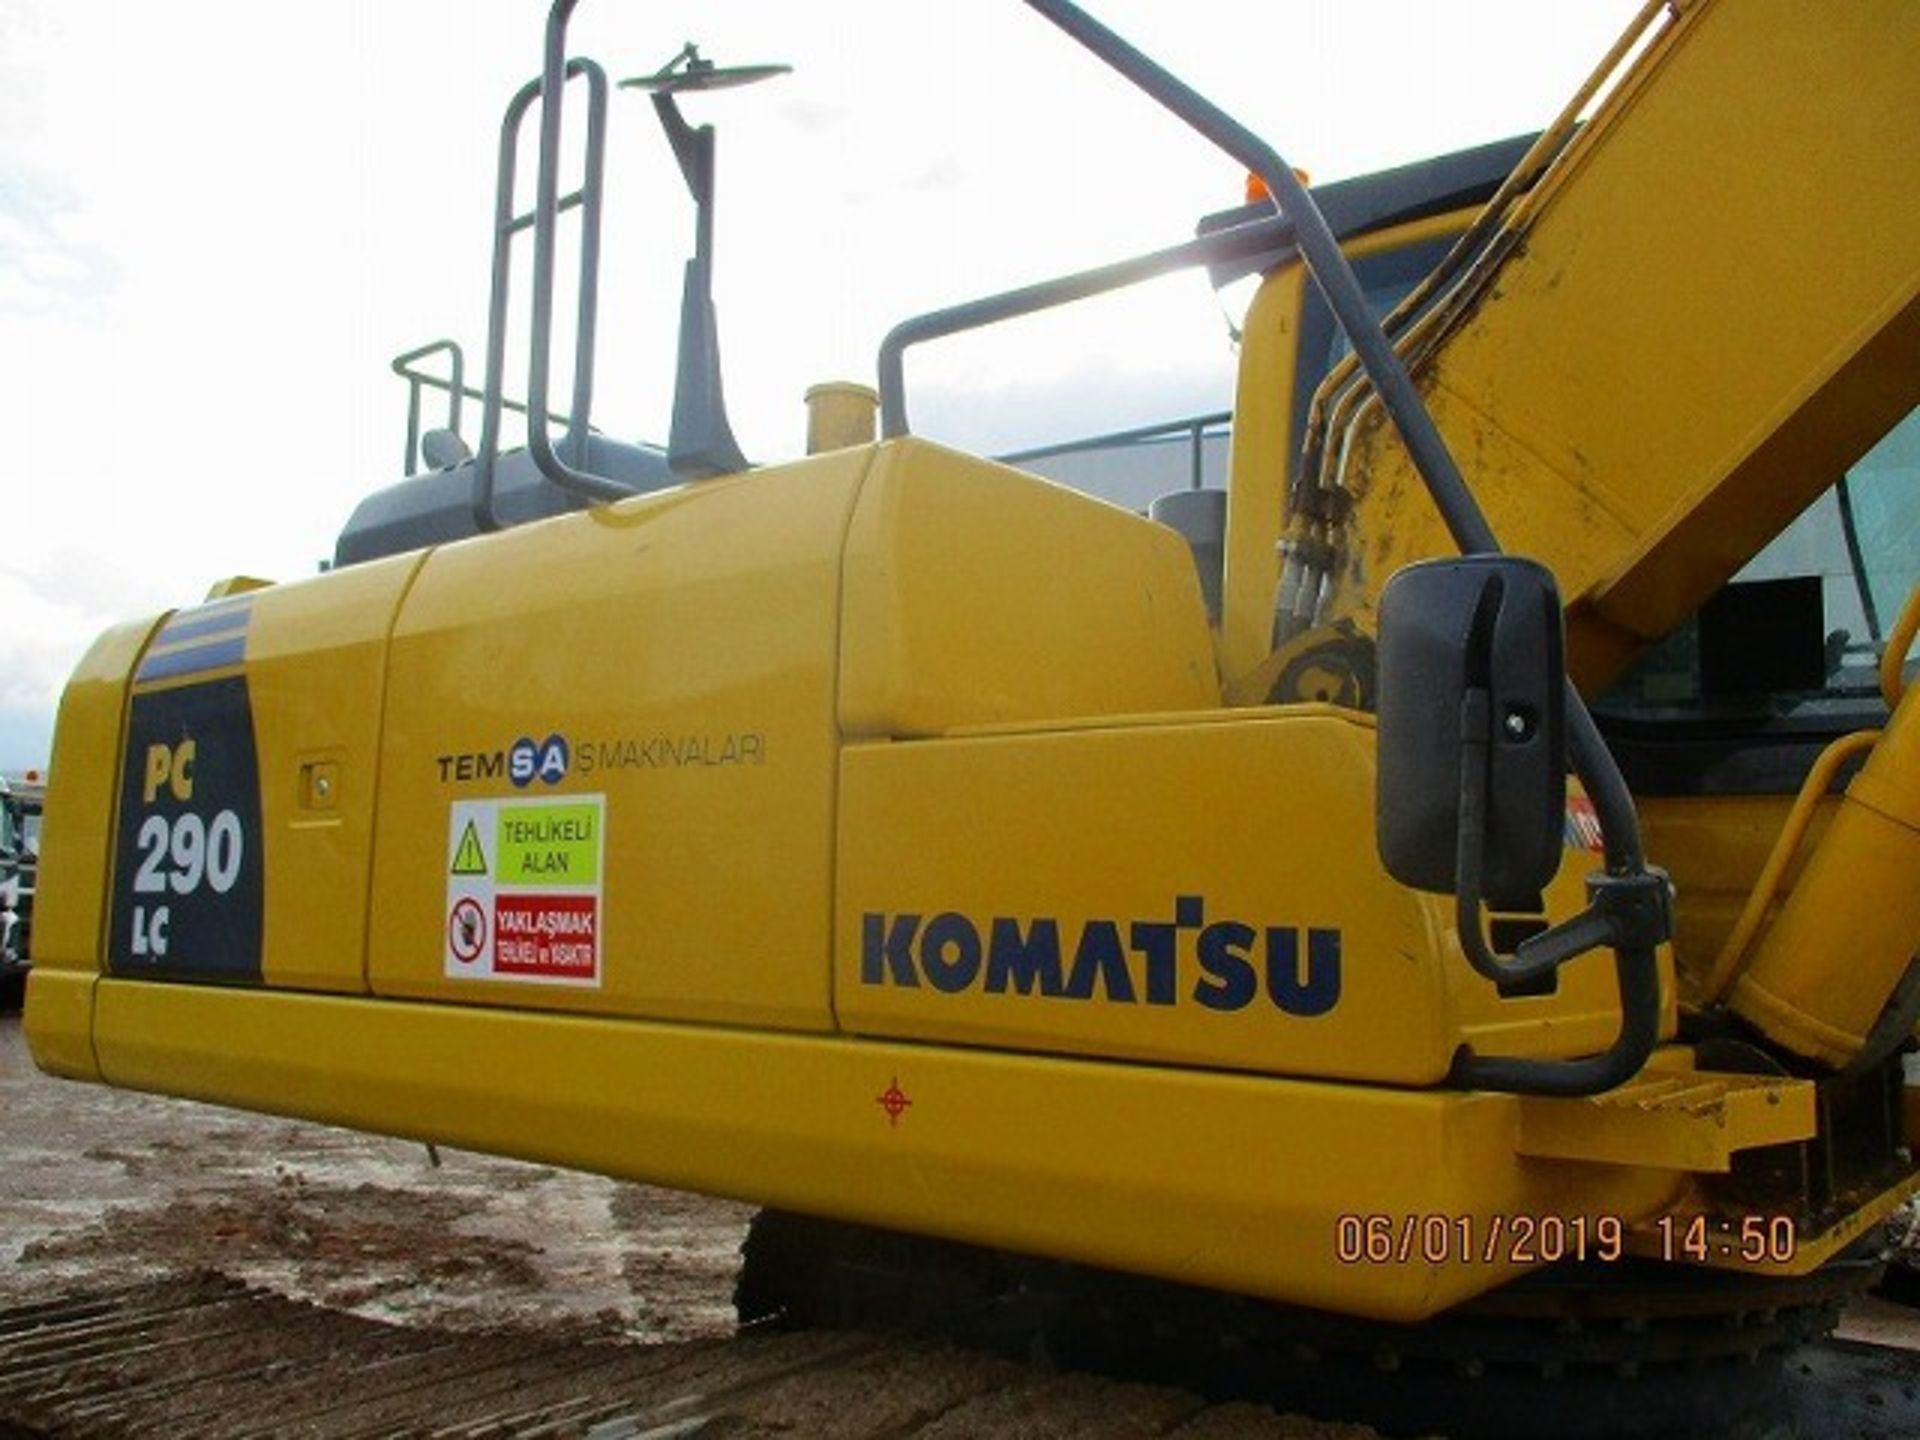 Komatsu PC290LC-8 Tracked Excavator - Image 8 of 52